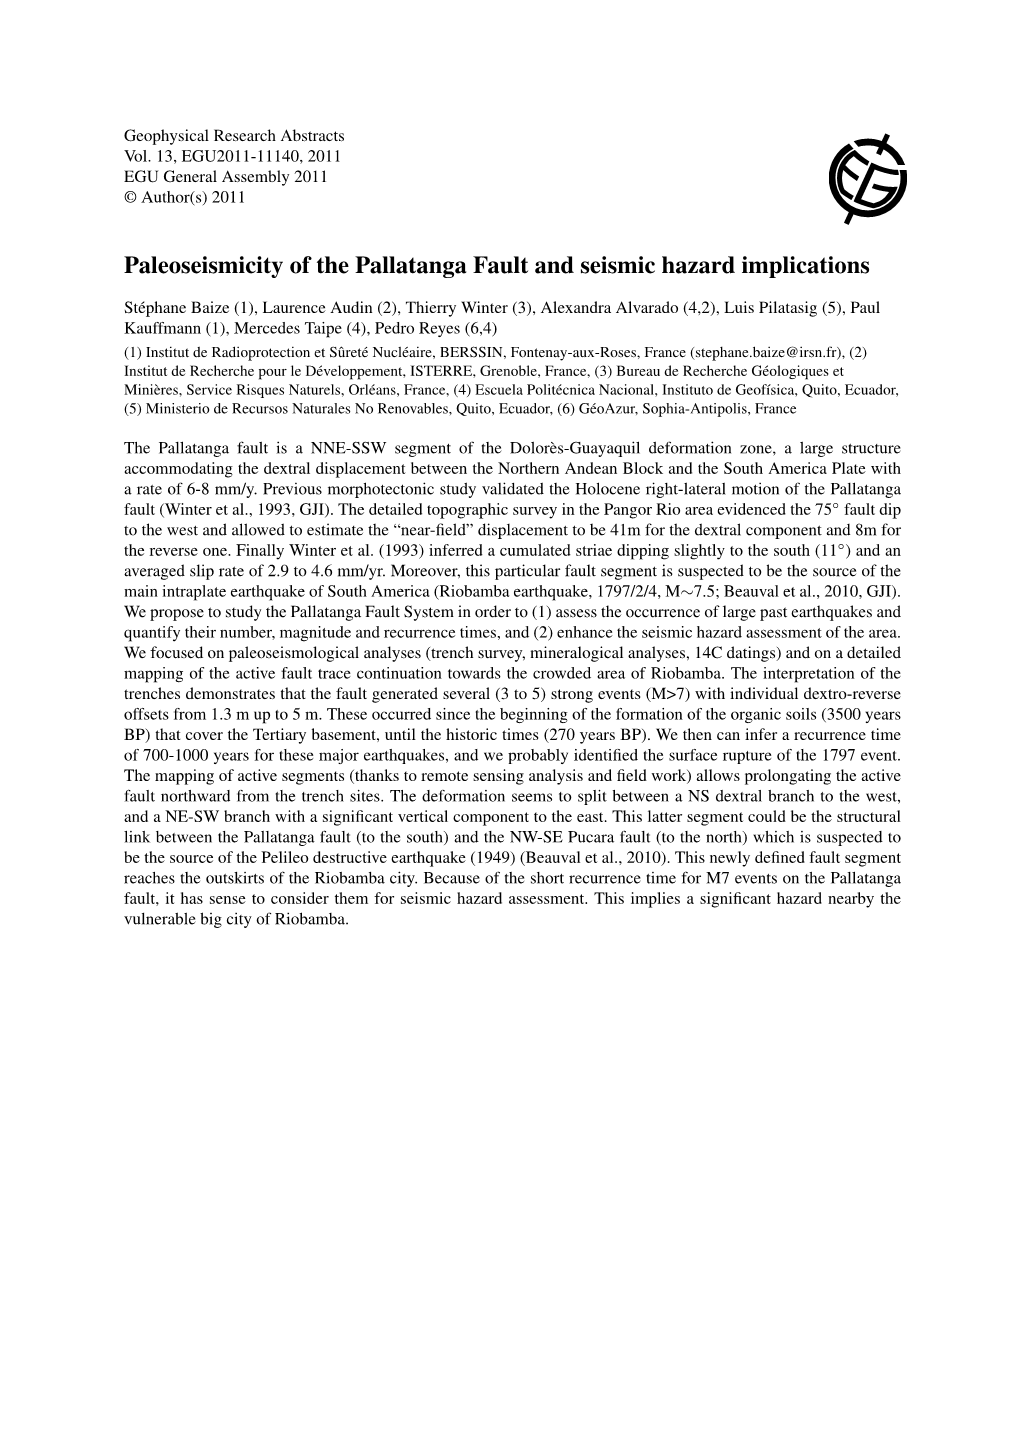 Paleoseismicity of the Pallatanga Fault and Seismic Hazard Implications